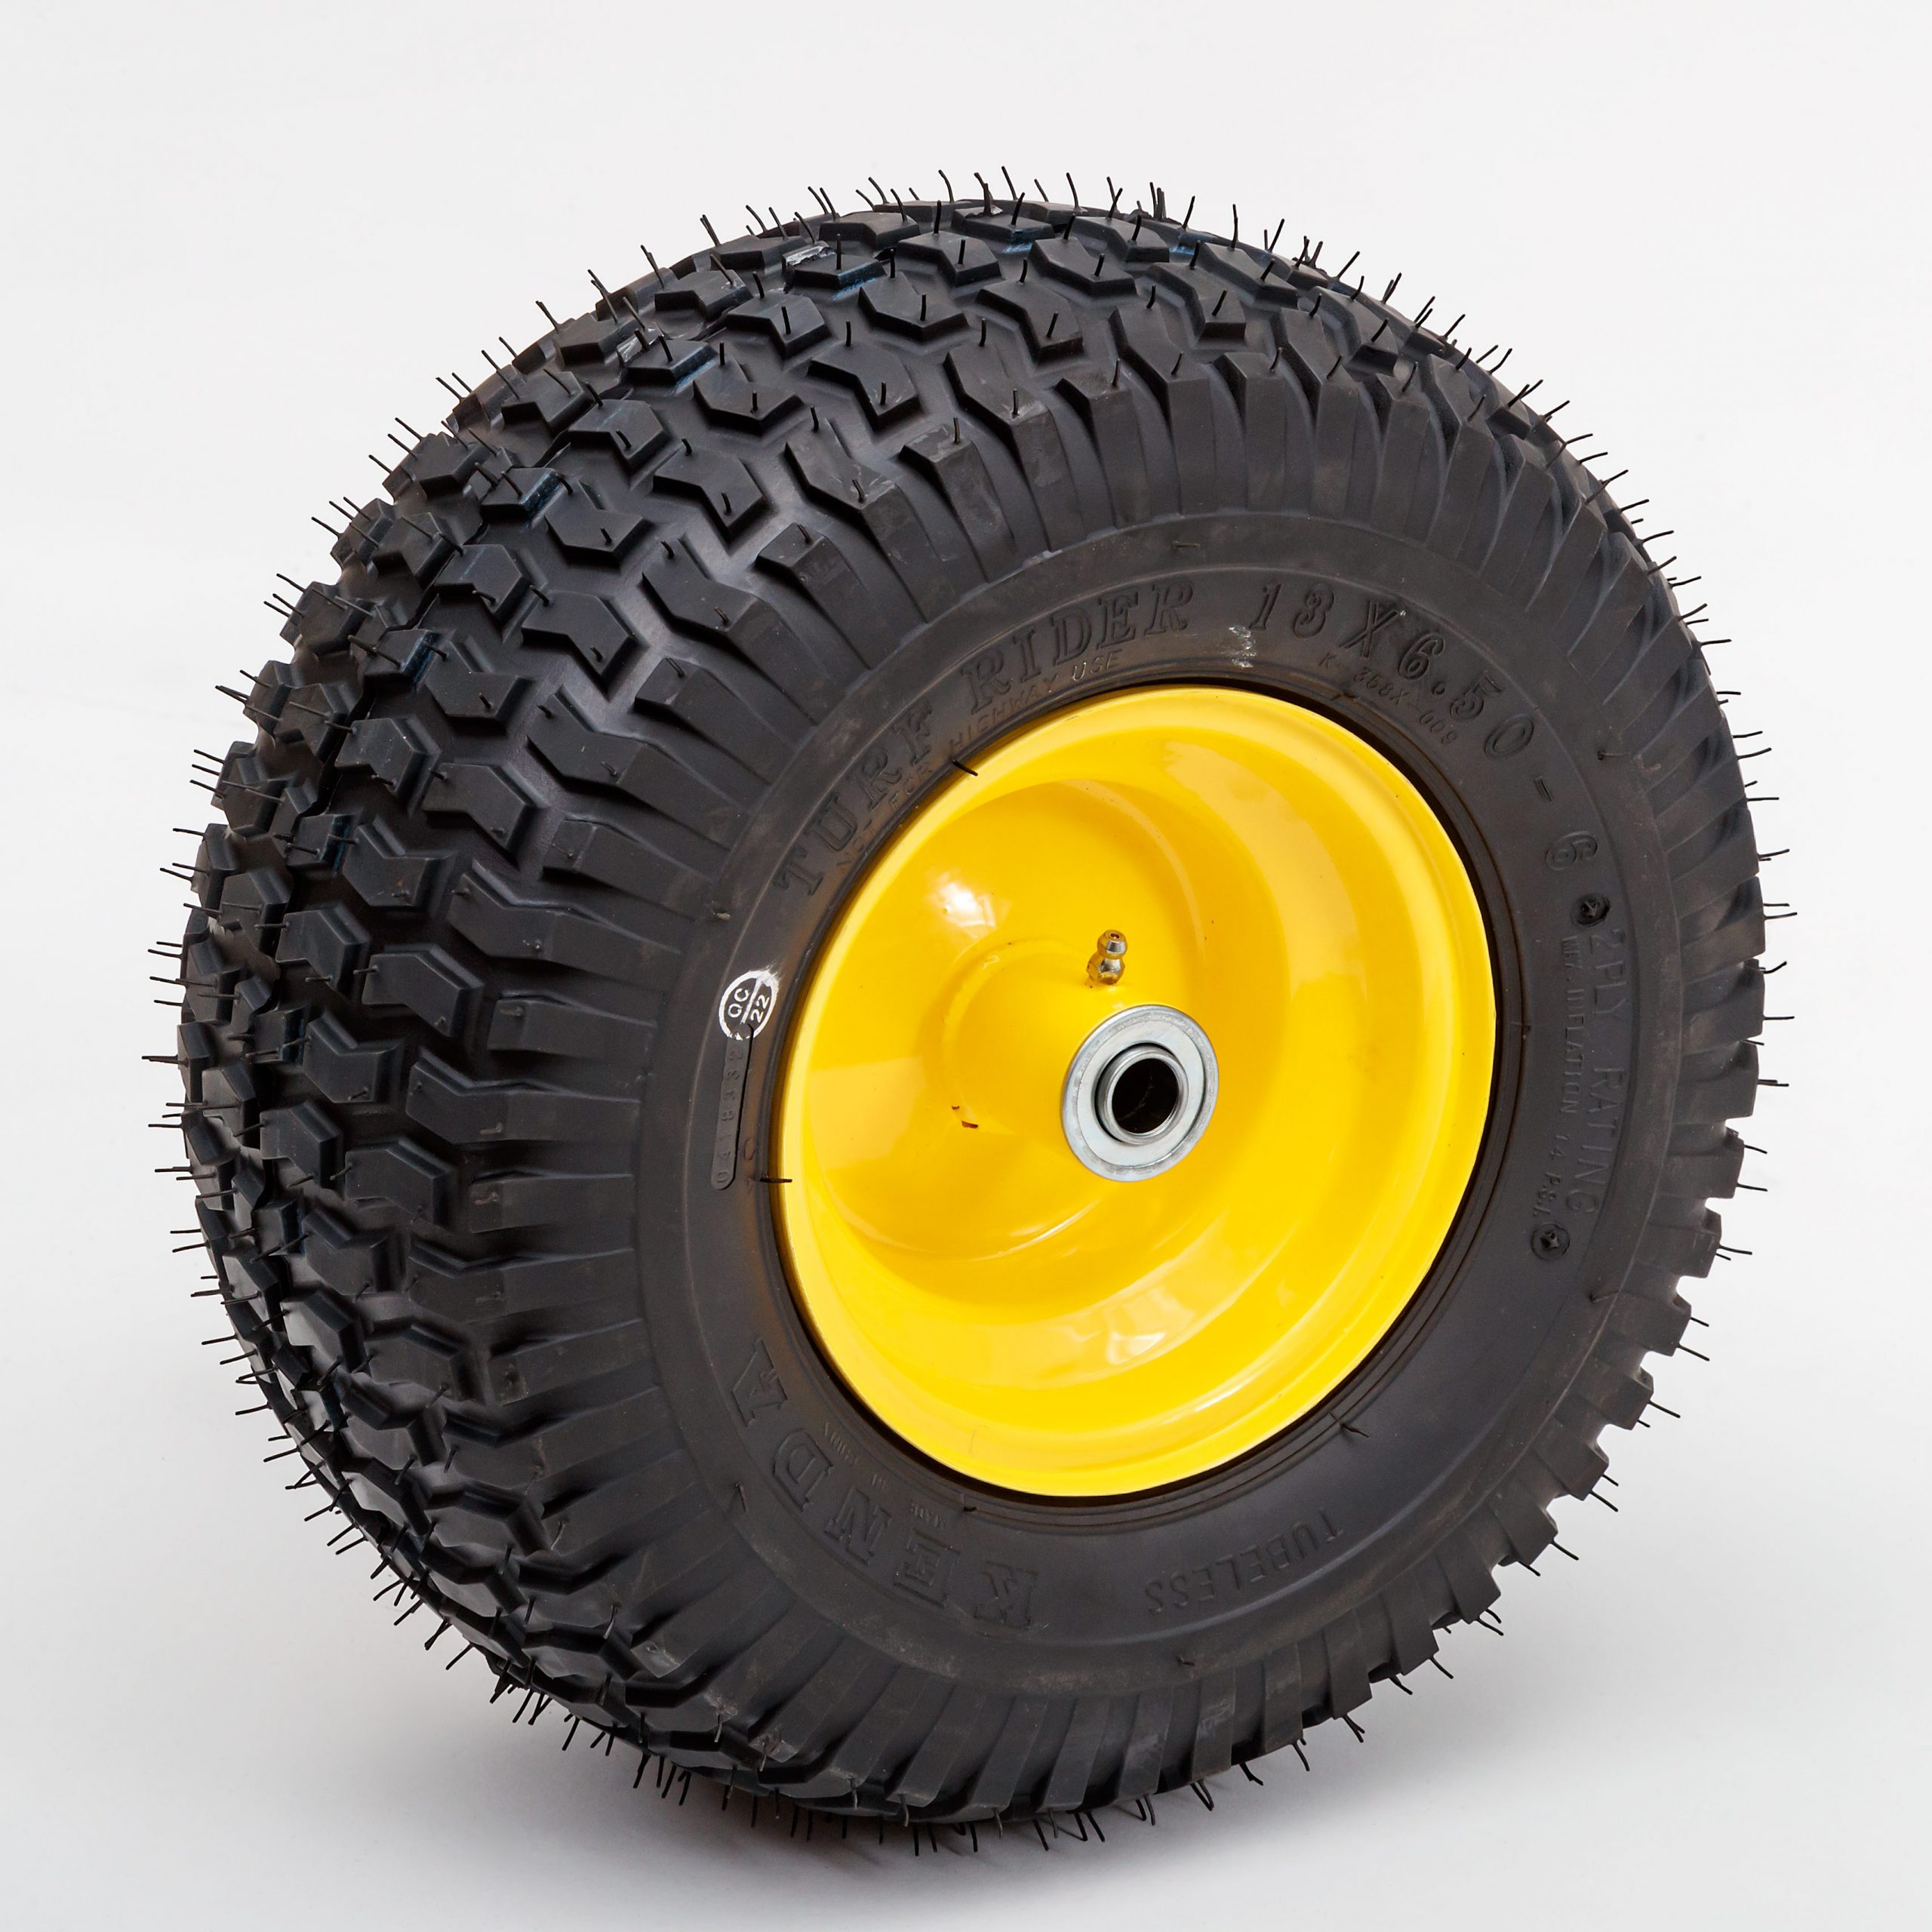 Lapp Wheels 16 Pneumatic Wheel Rim Color/Tread Pattern Options Wheel/Hub/Bearing Size Options Wheelbarrow/Hand Truck/Garden cart Replacement 